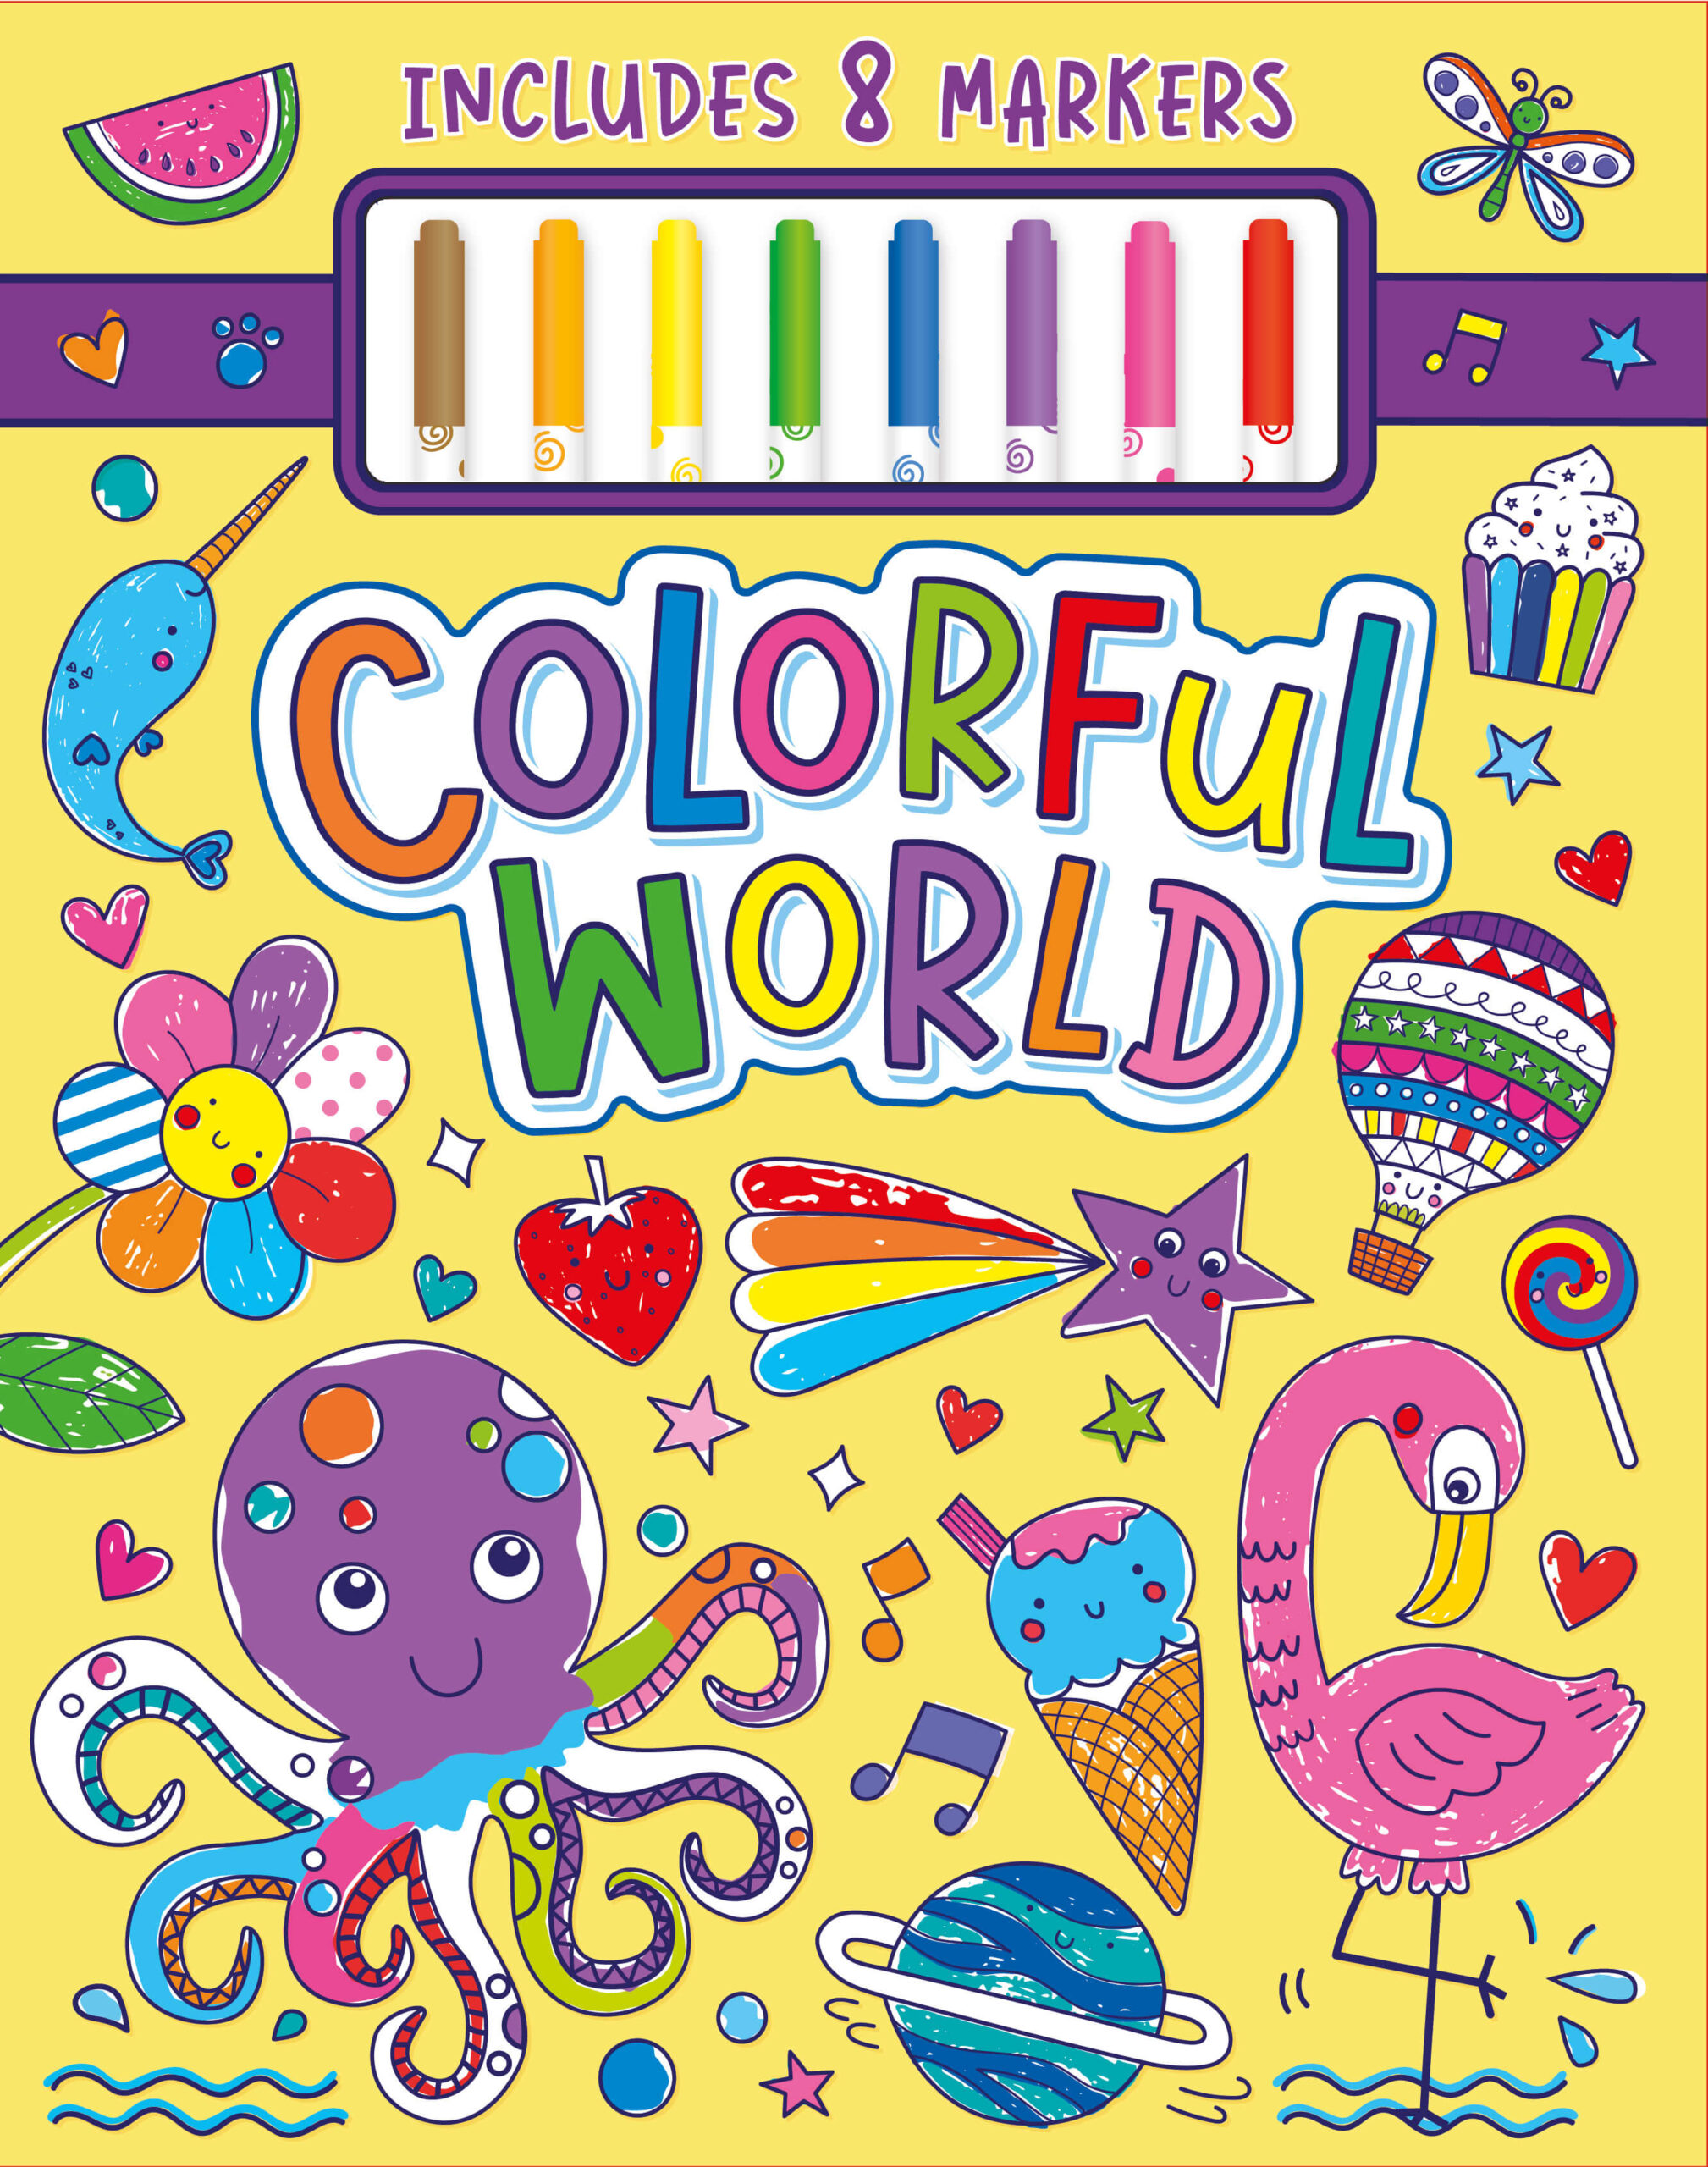 Colorful World: Marker Activity Kit